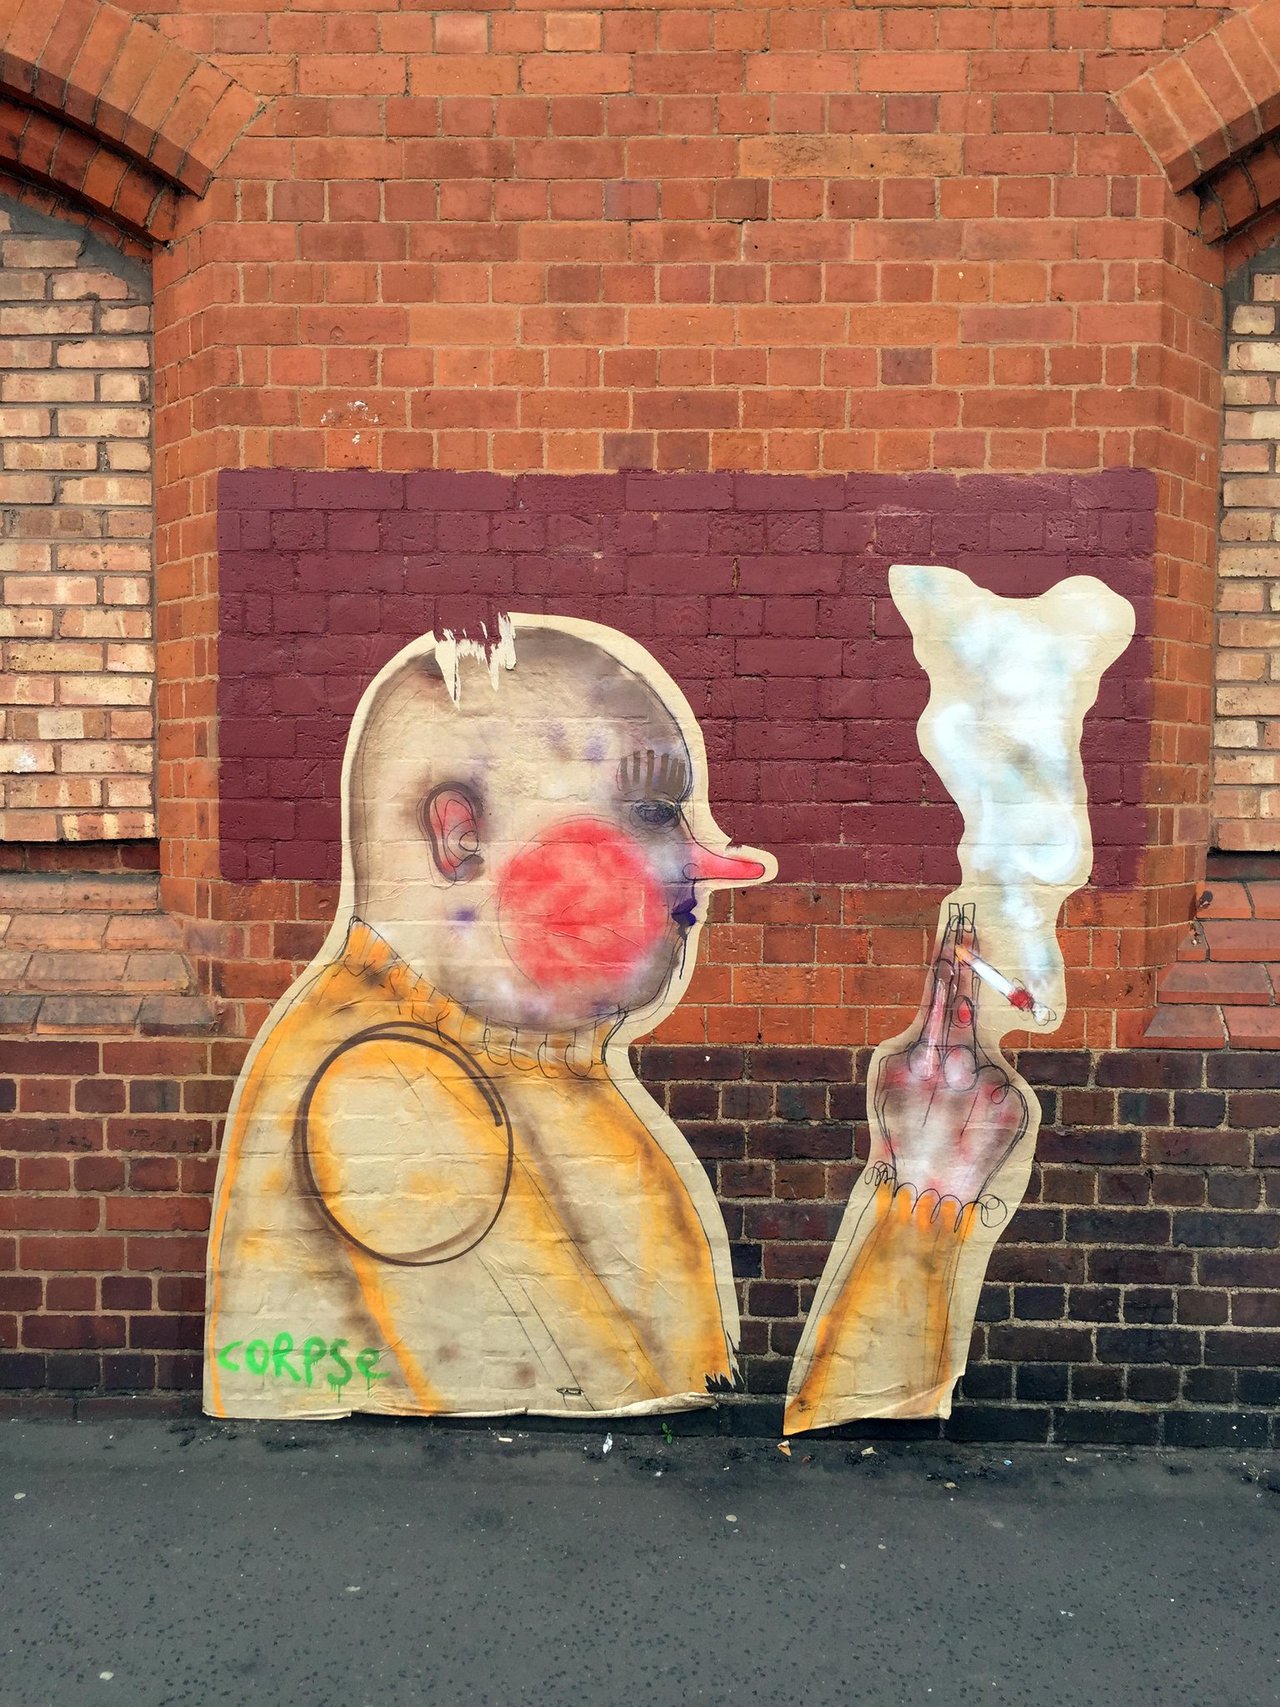 RT @djcolatron: Always a pleasure to have Corpse back in Birmingham :) 

#Digbeth #pasteup #wheatpaste #streetart #graffiti http://t.co/MGbA0fQWXw